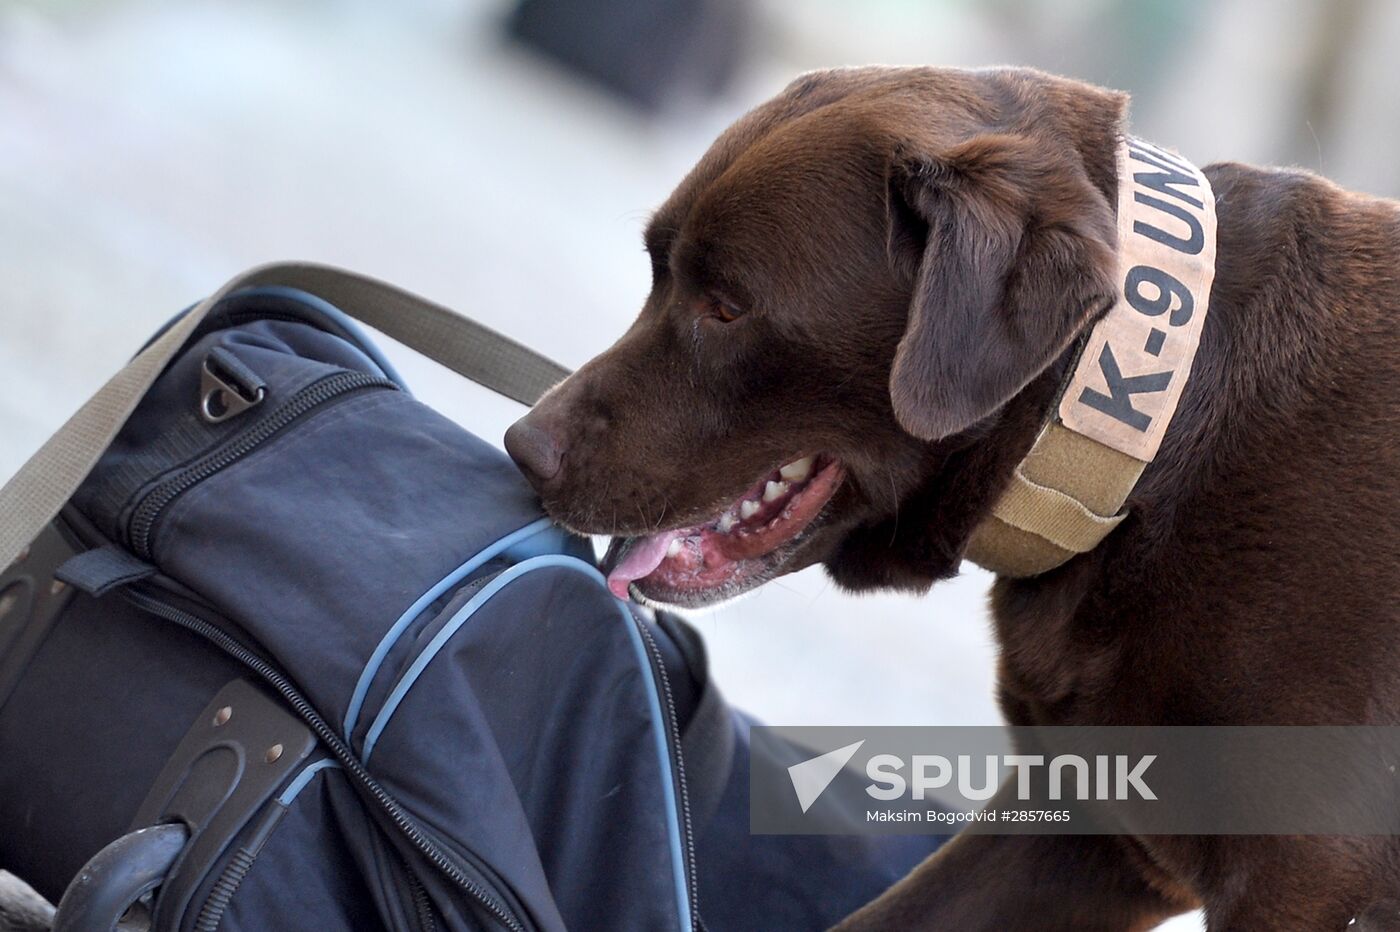 Detector dog service of Tatarstan Customs